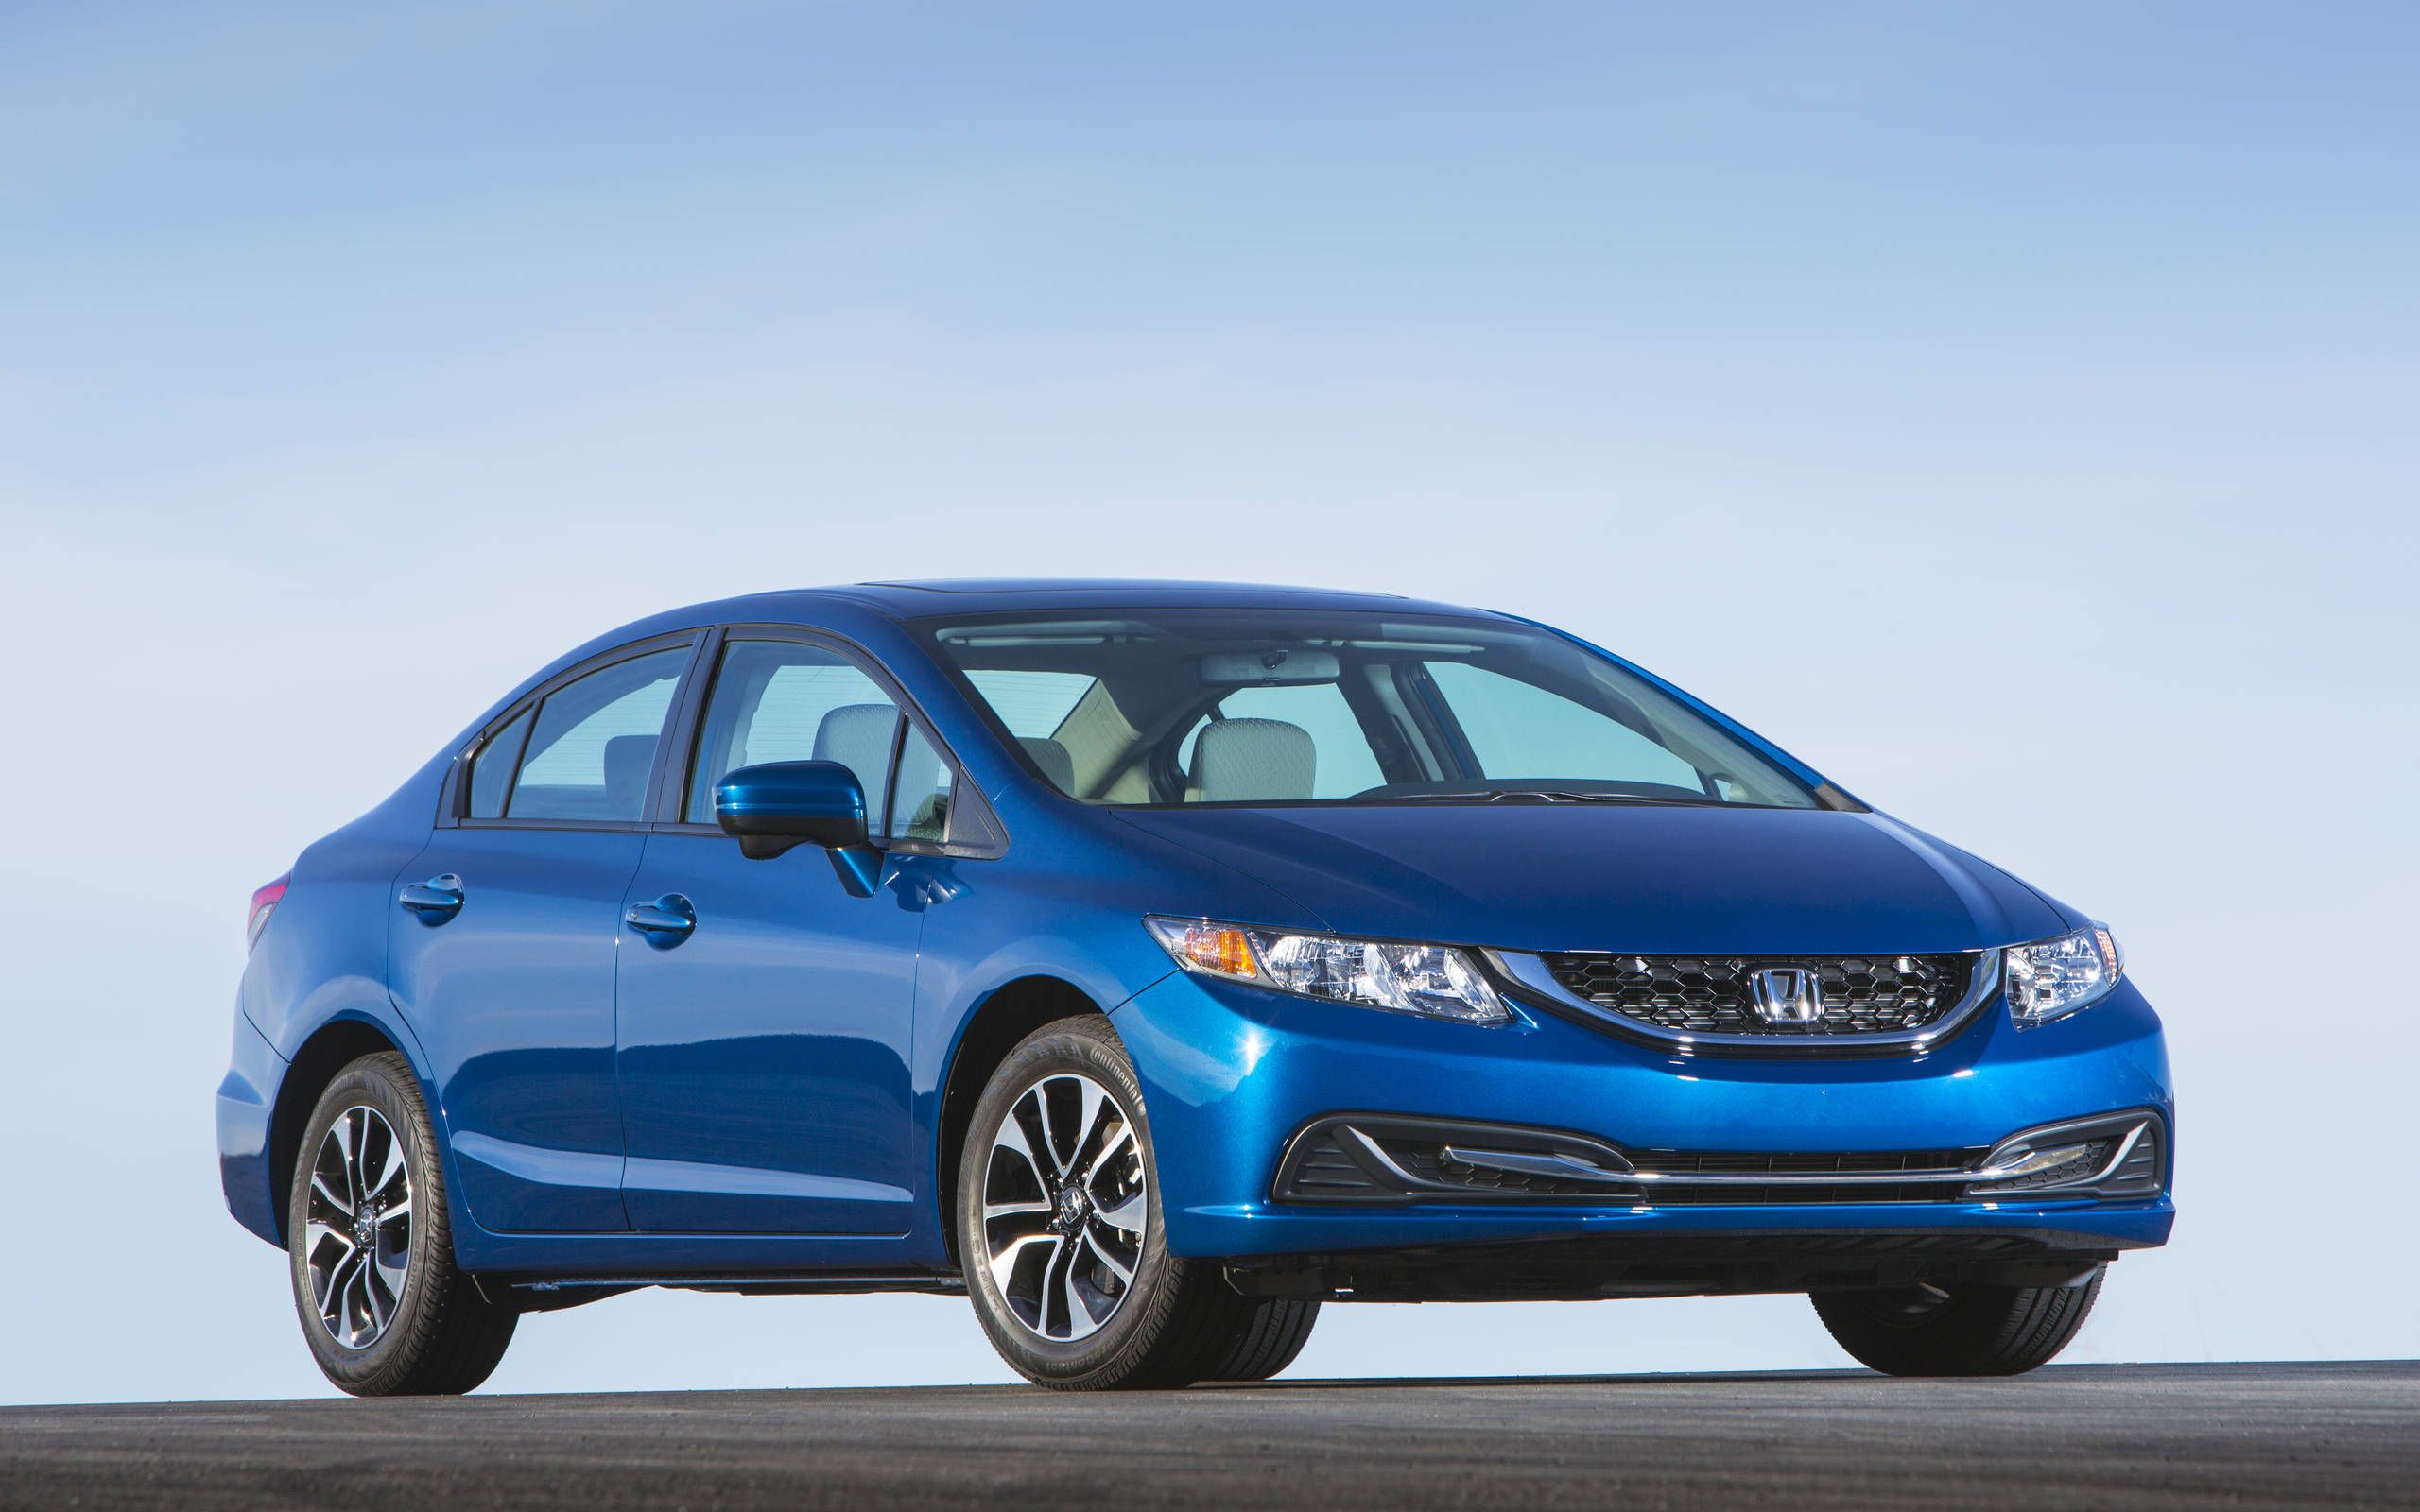 2014 Honda Civic EX-L Navi Sedan review notes